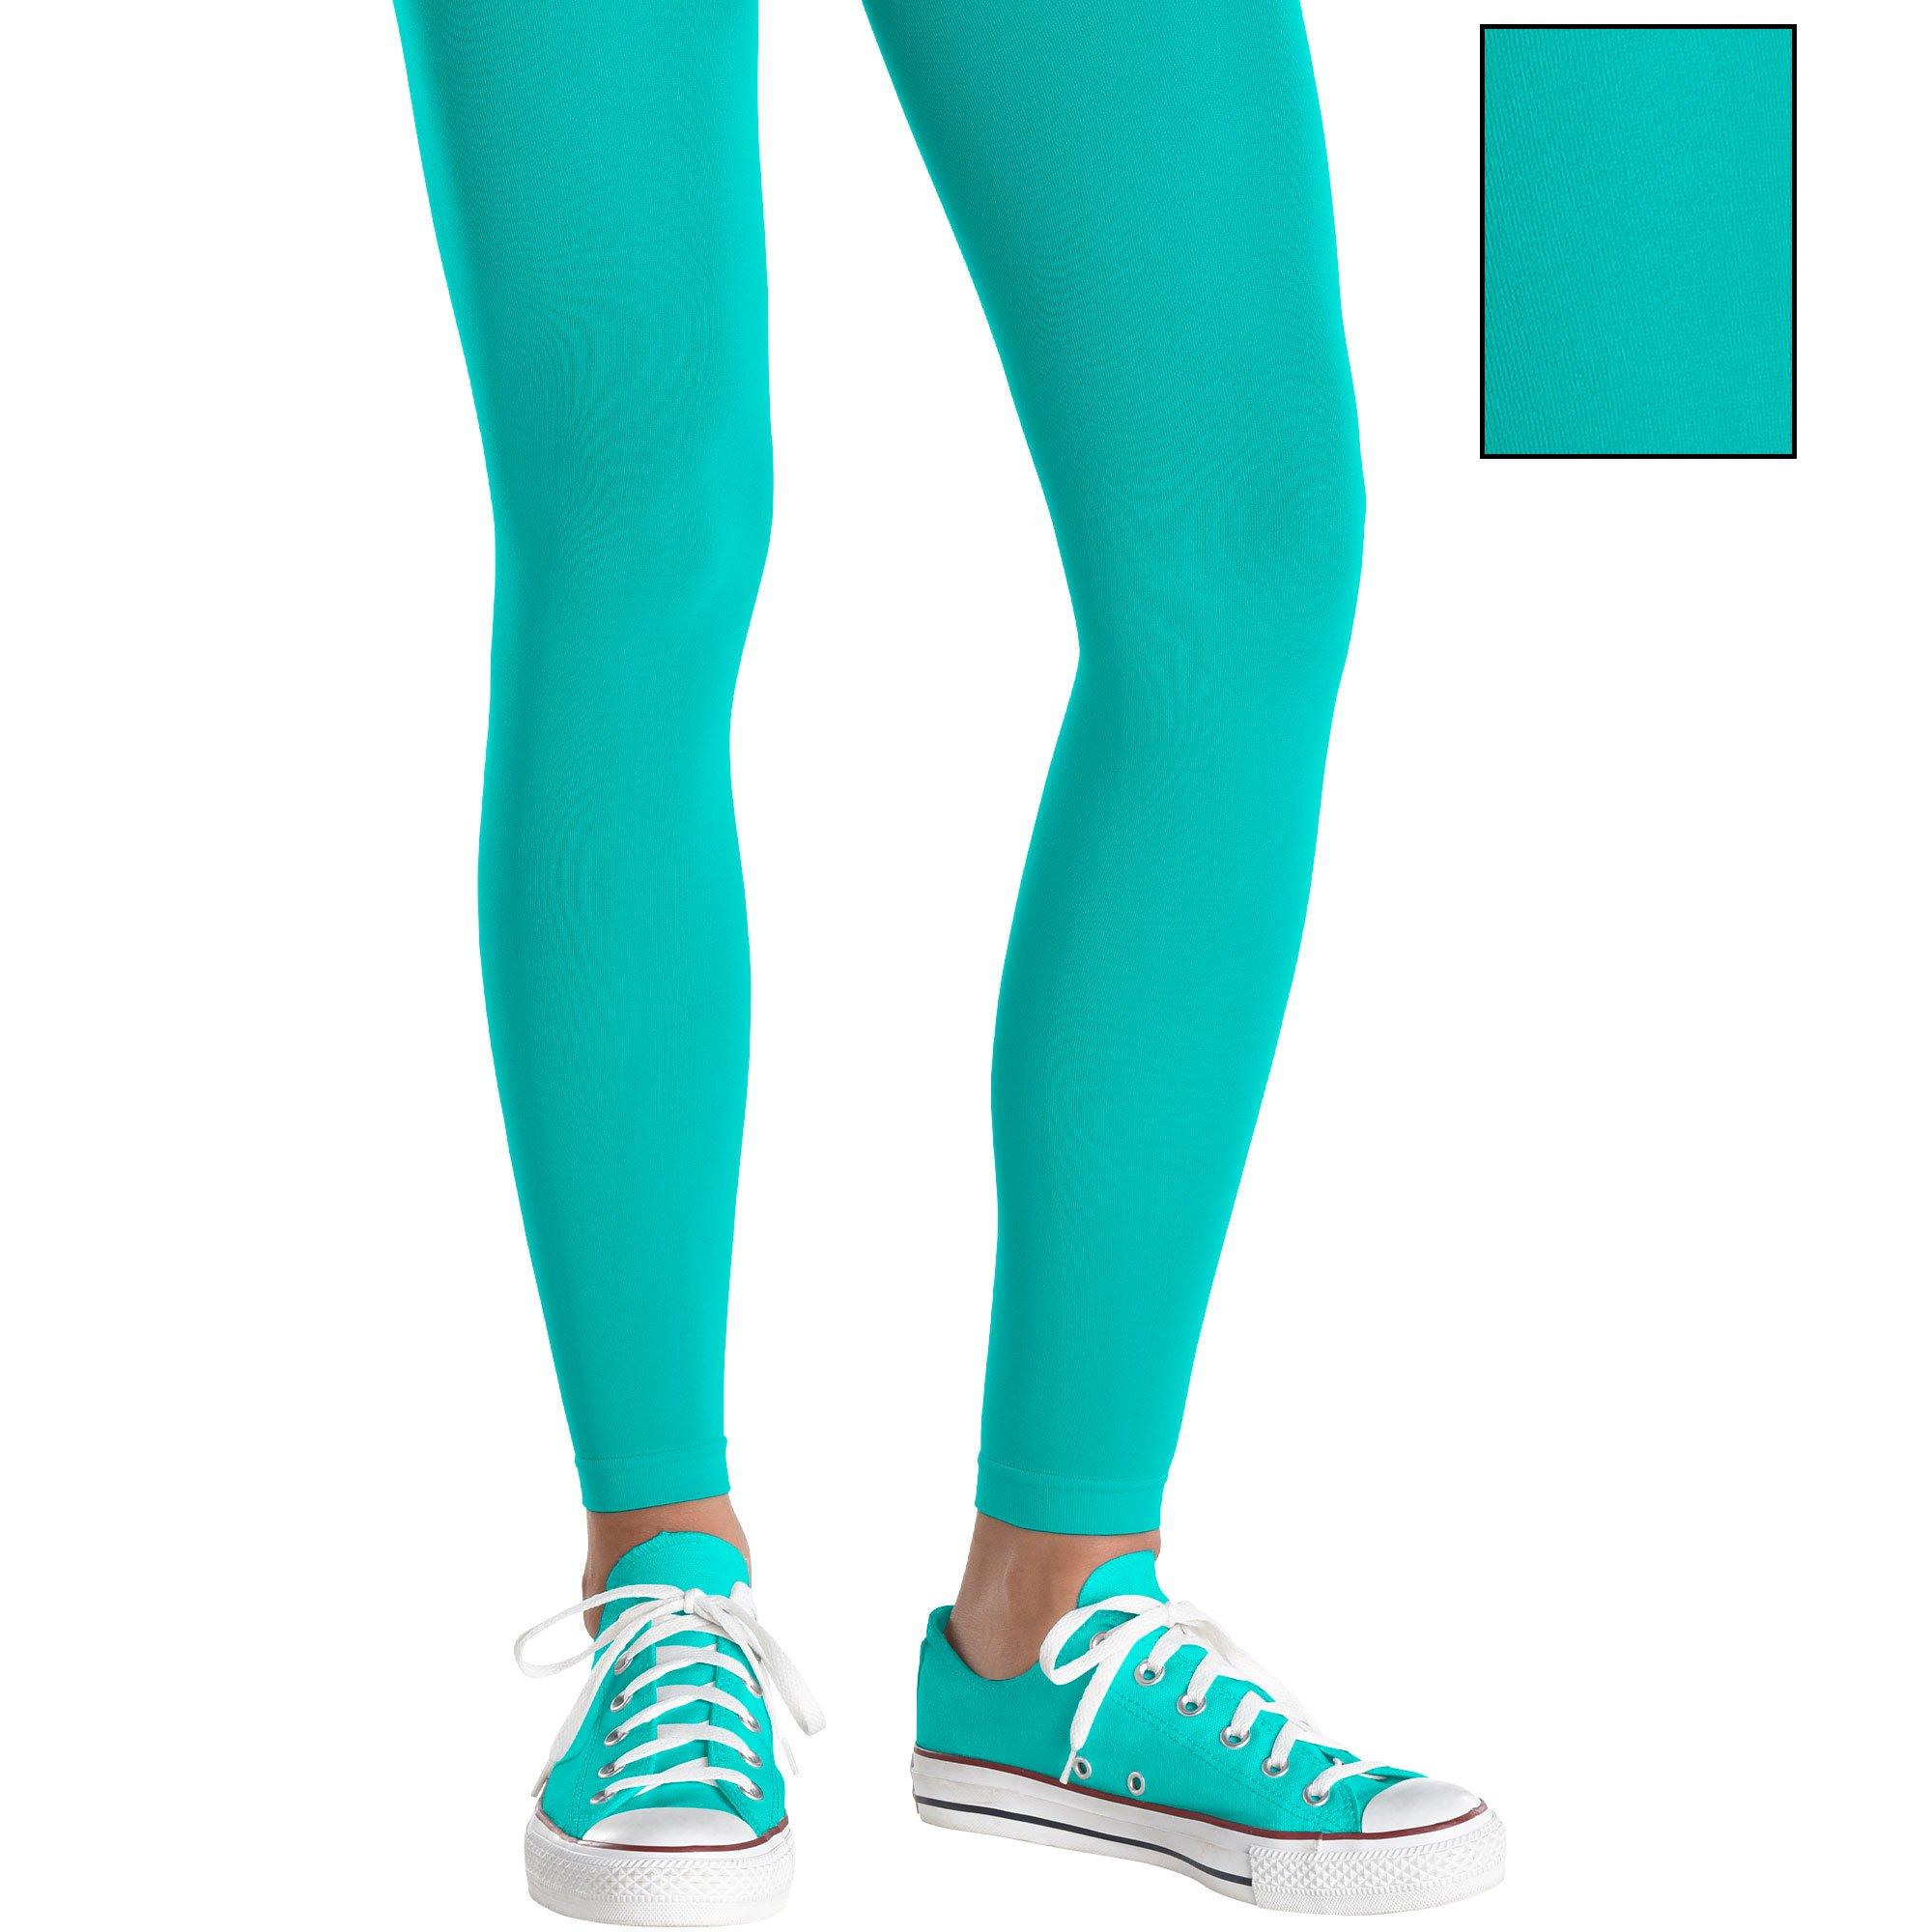 shefit leggings in turquoise - Gem